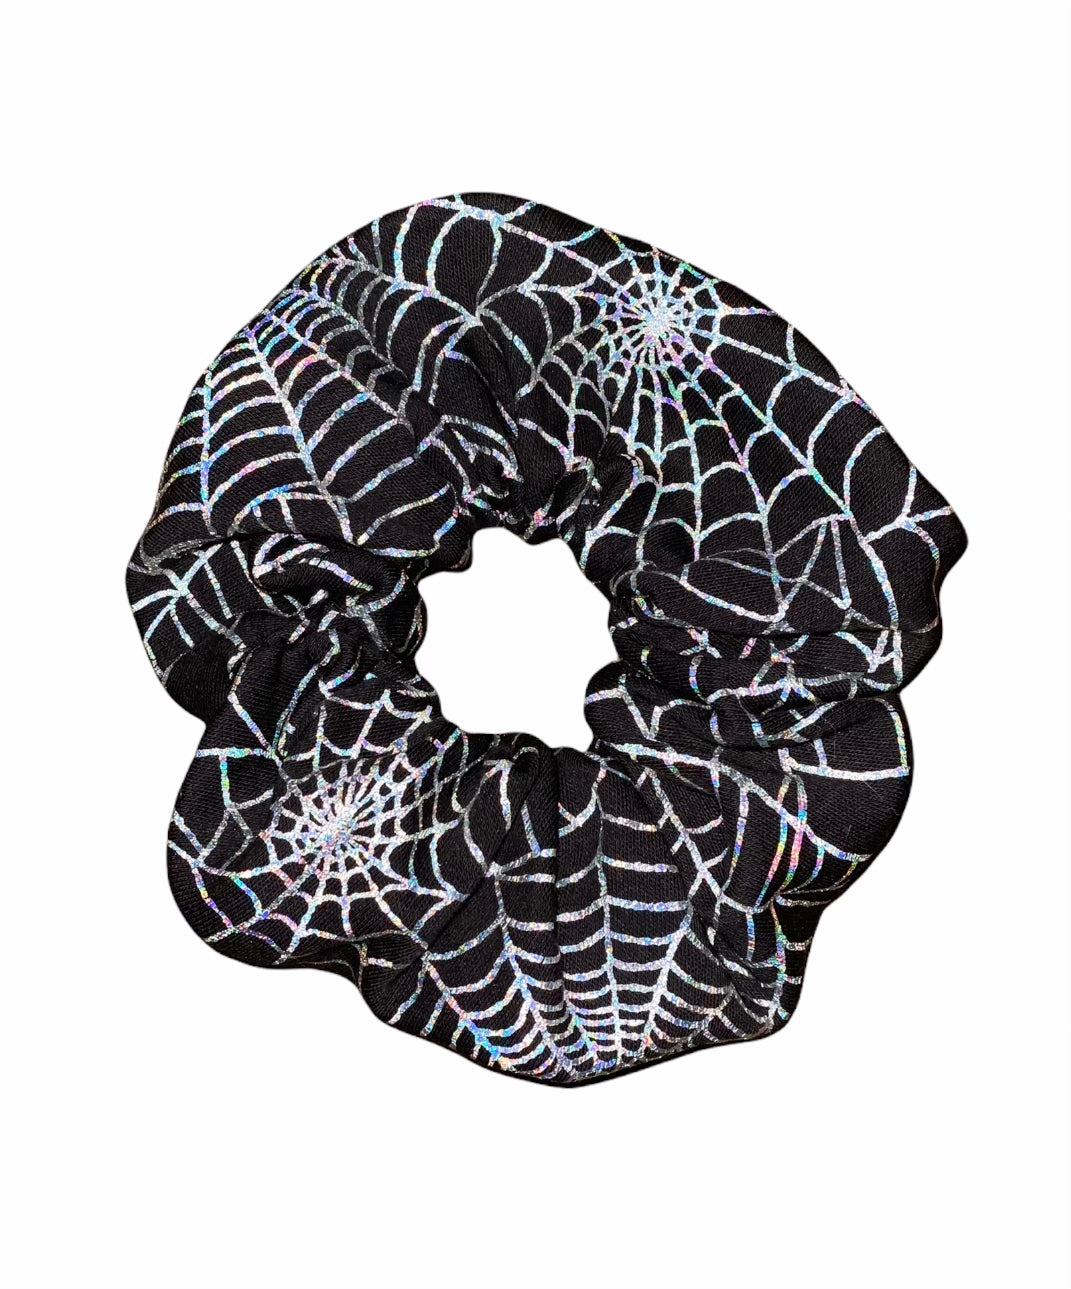 Tied Together Holographic Spider Web scrunchie